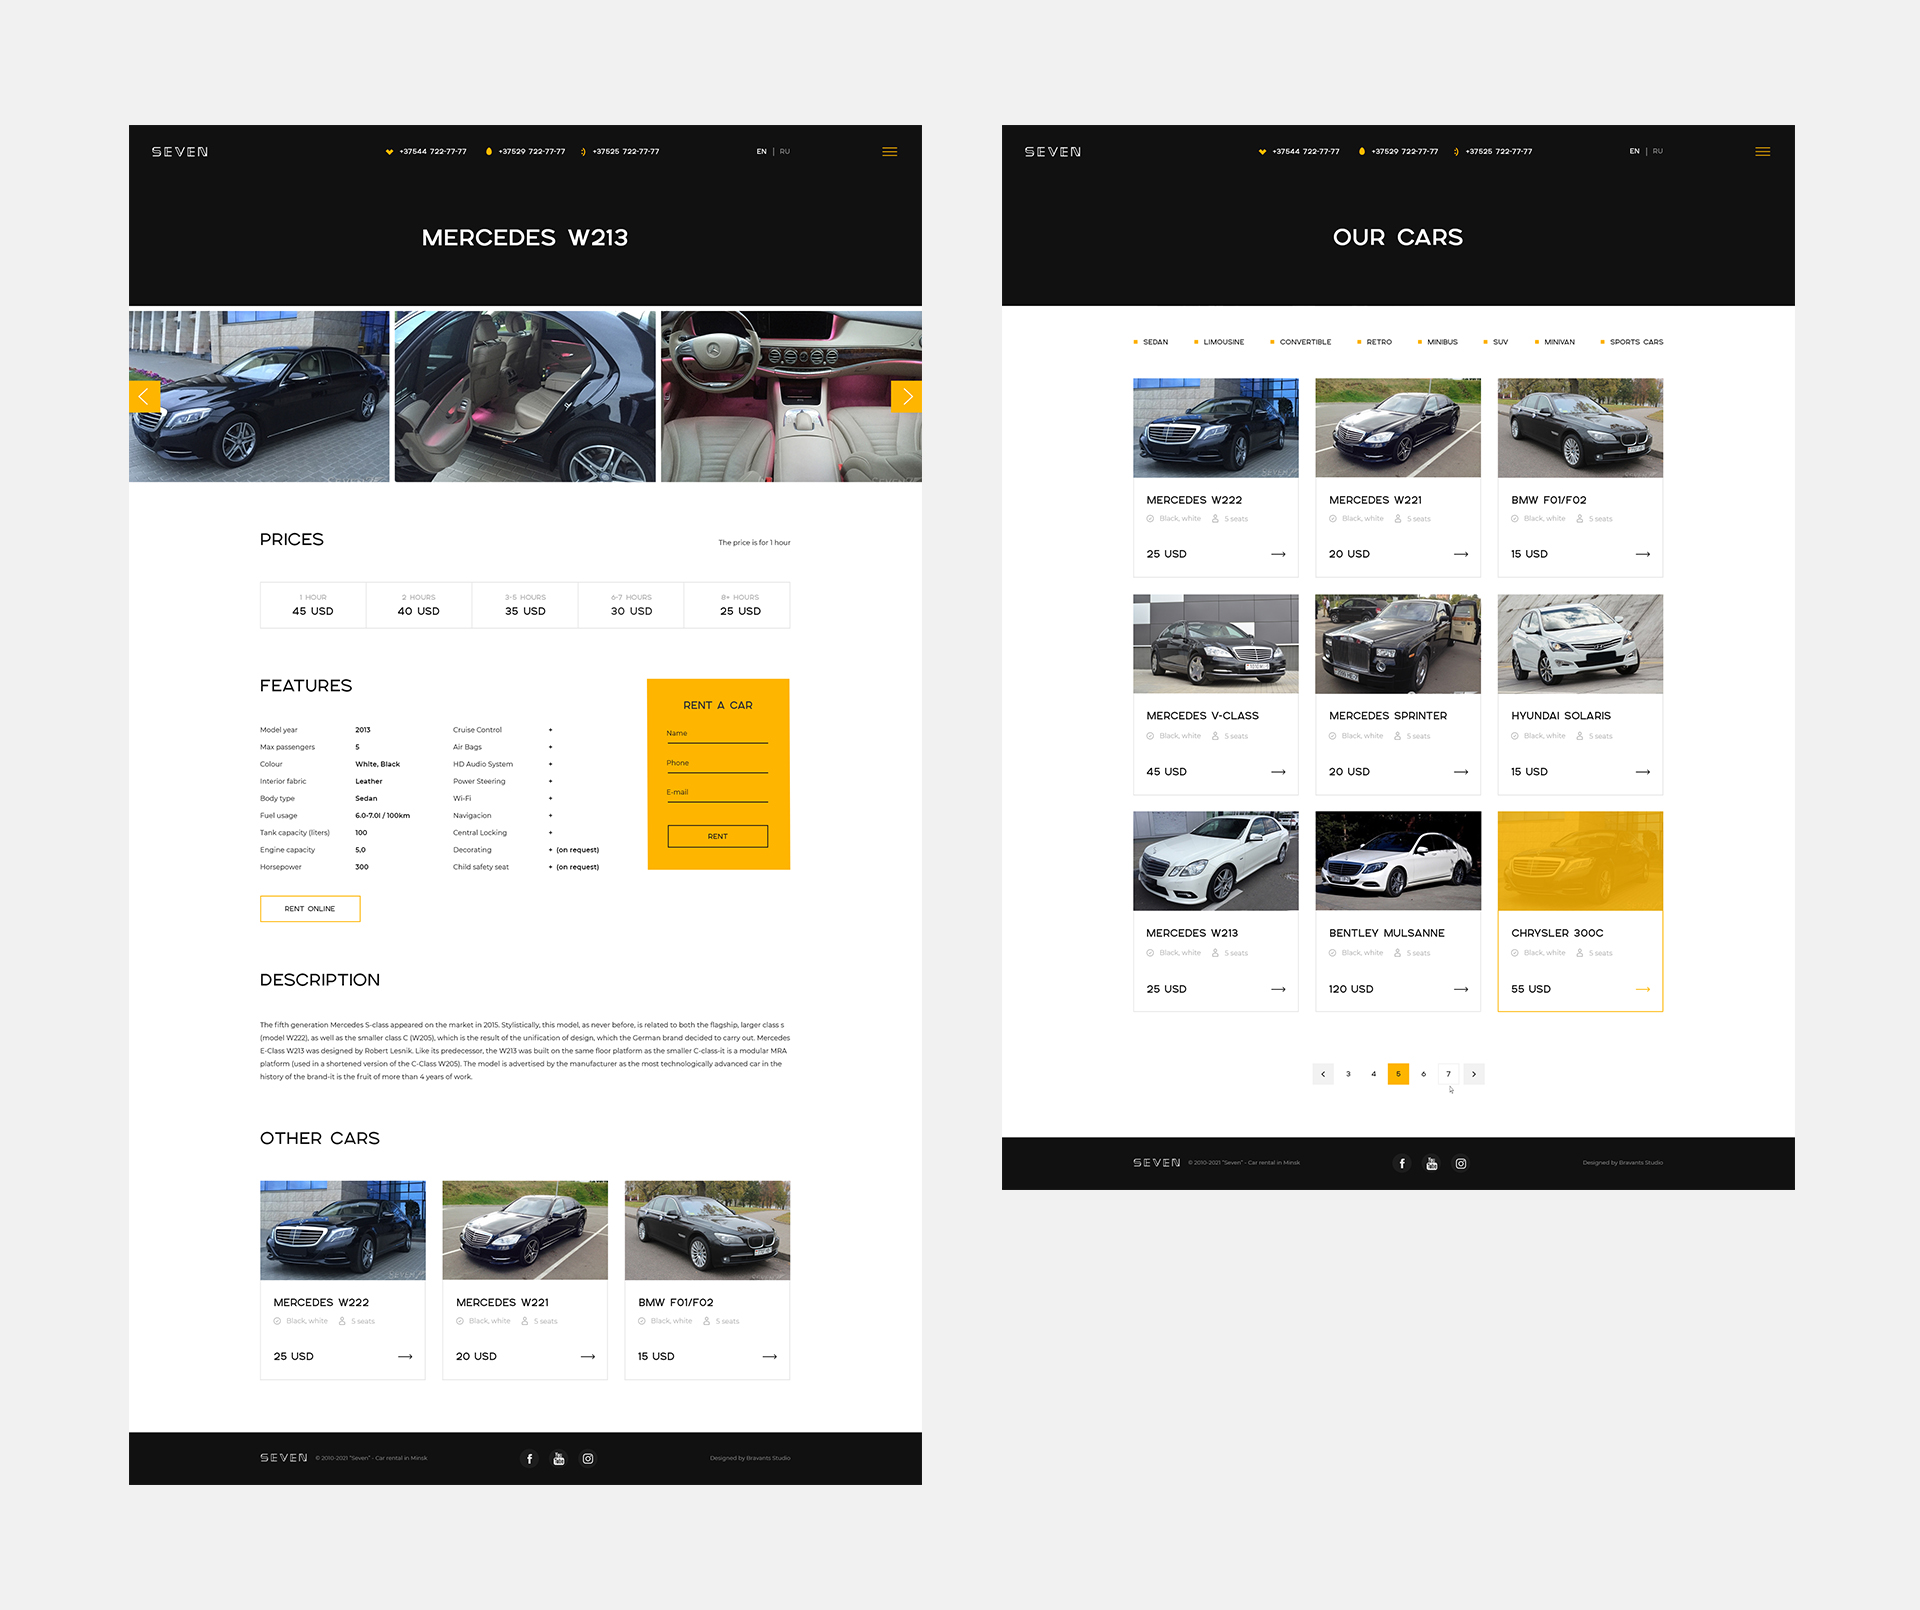 Website design and development for a car rental company